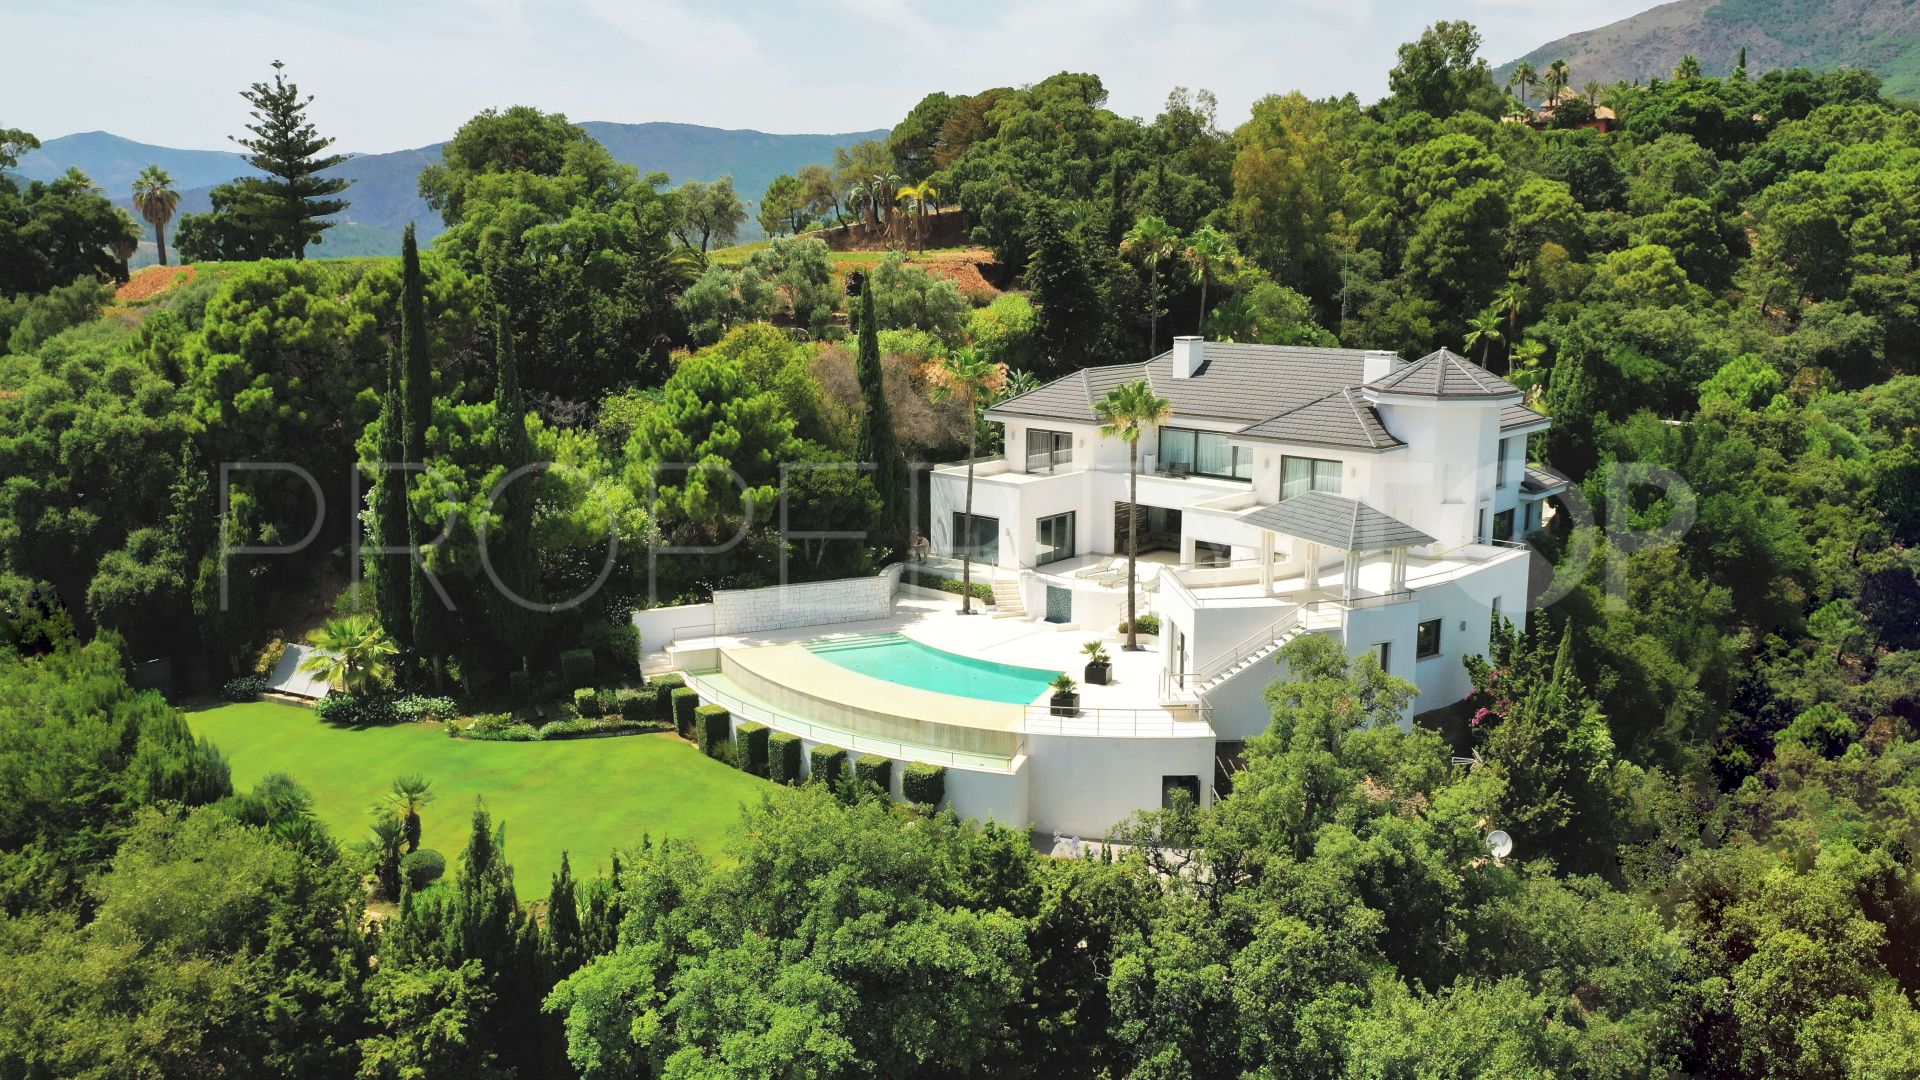 For sale villa in La Zagaleta with 5 bedrooms